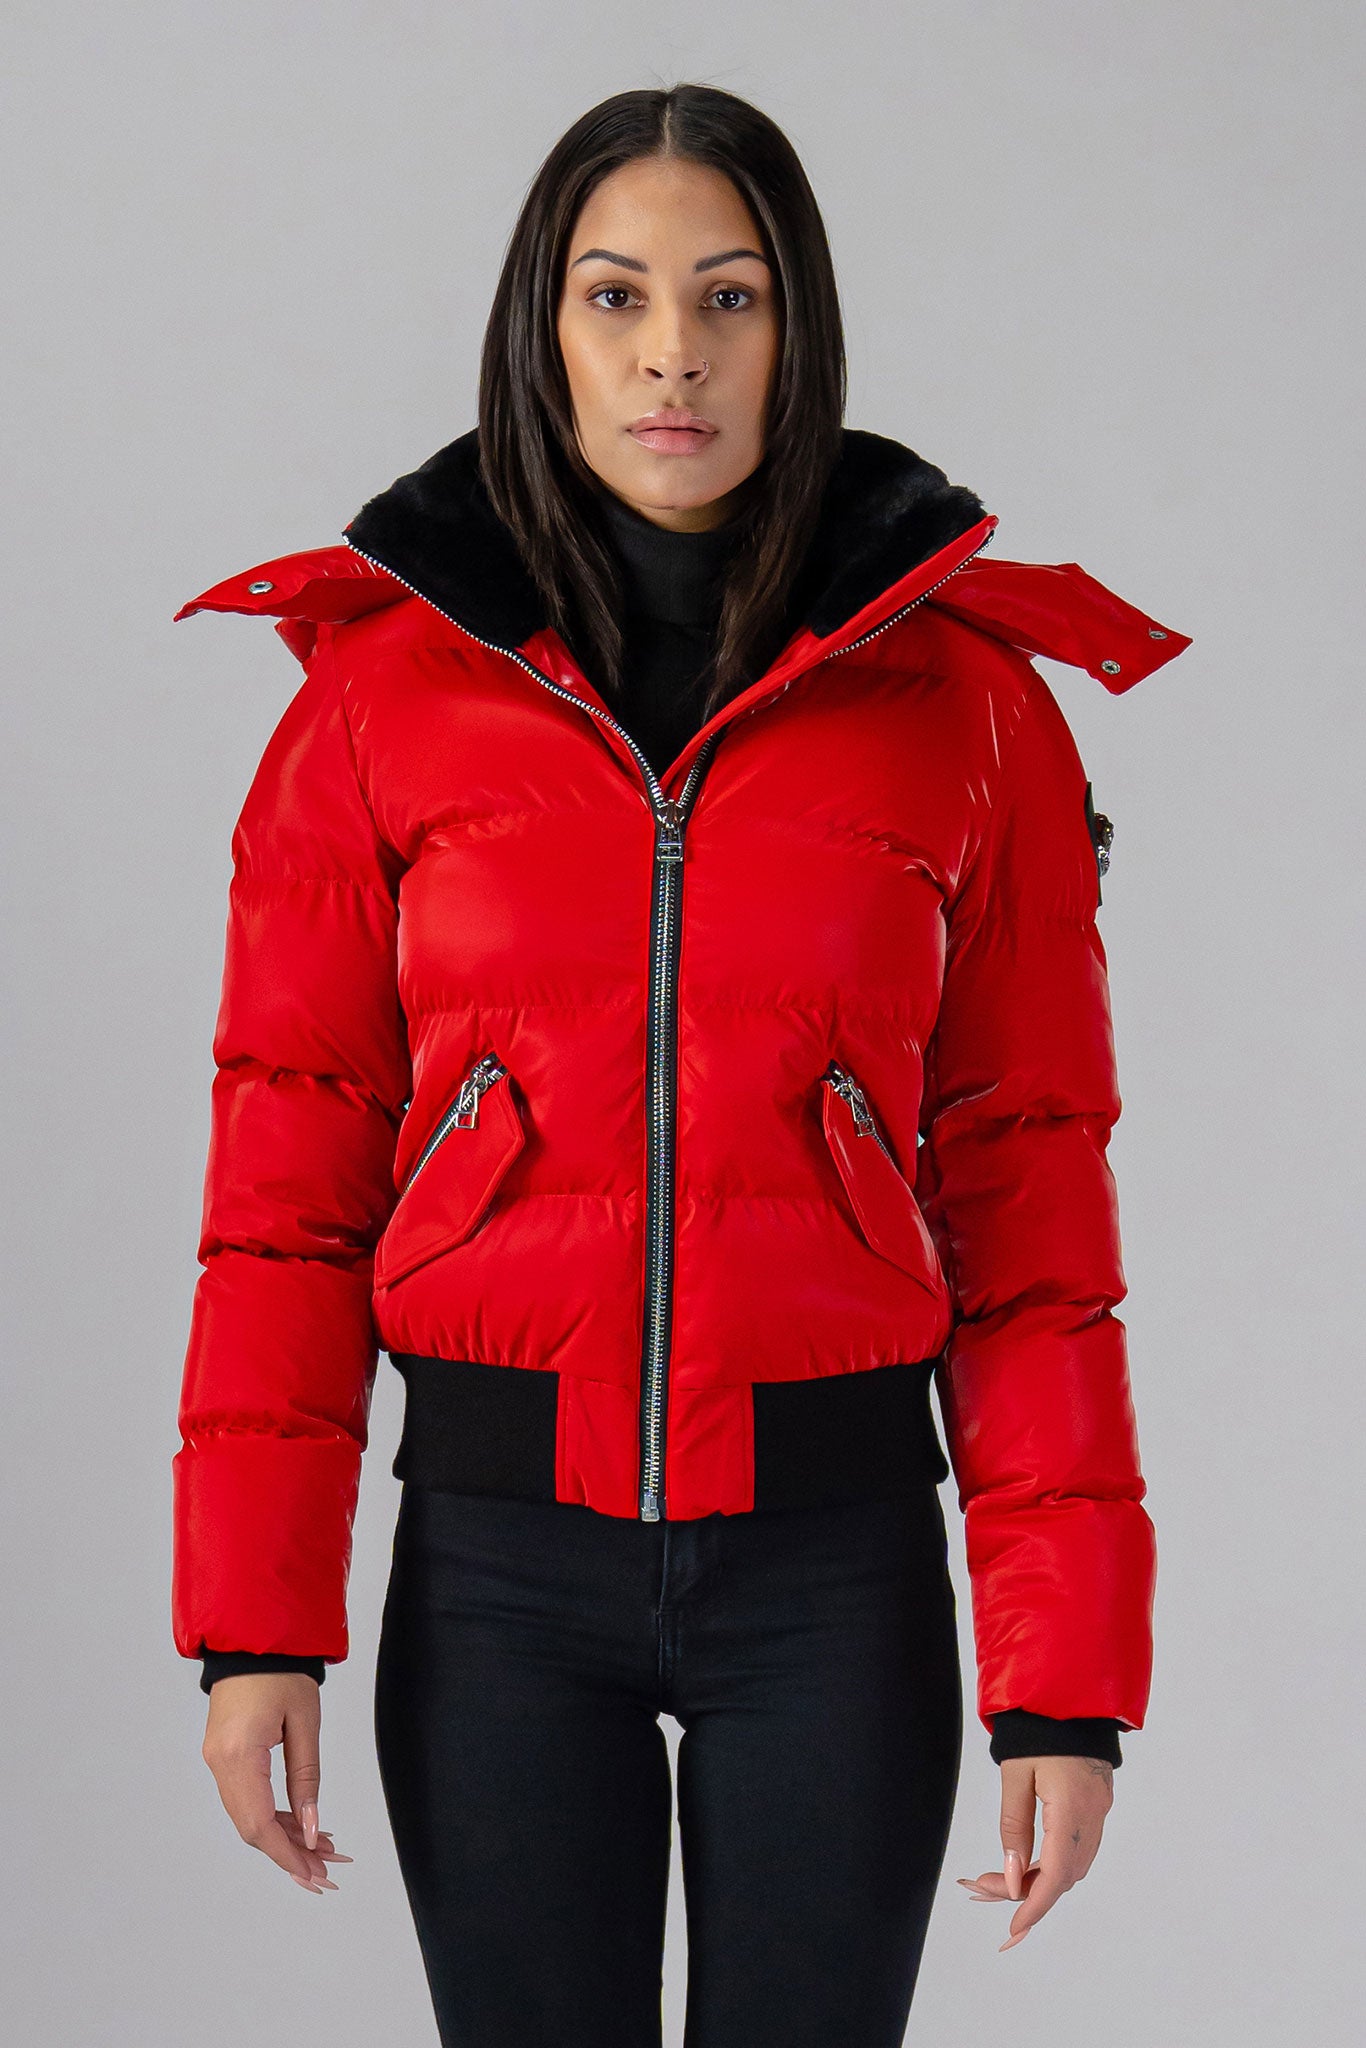 Woodpecker Women's Woody Bomber Winter coat. High-end Canadian designer winter coat for women in shiny “All Wet Red